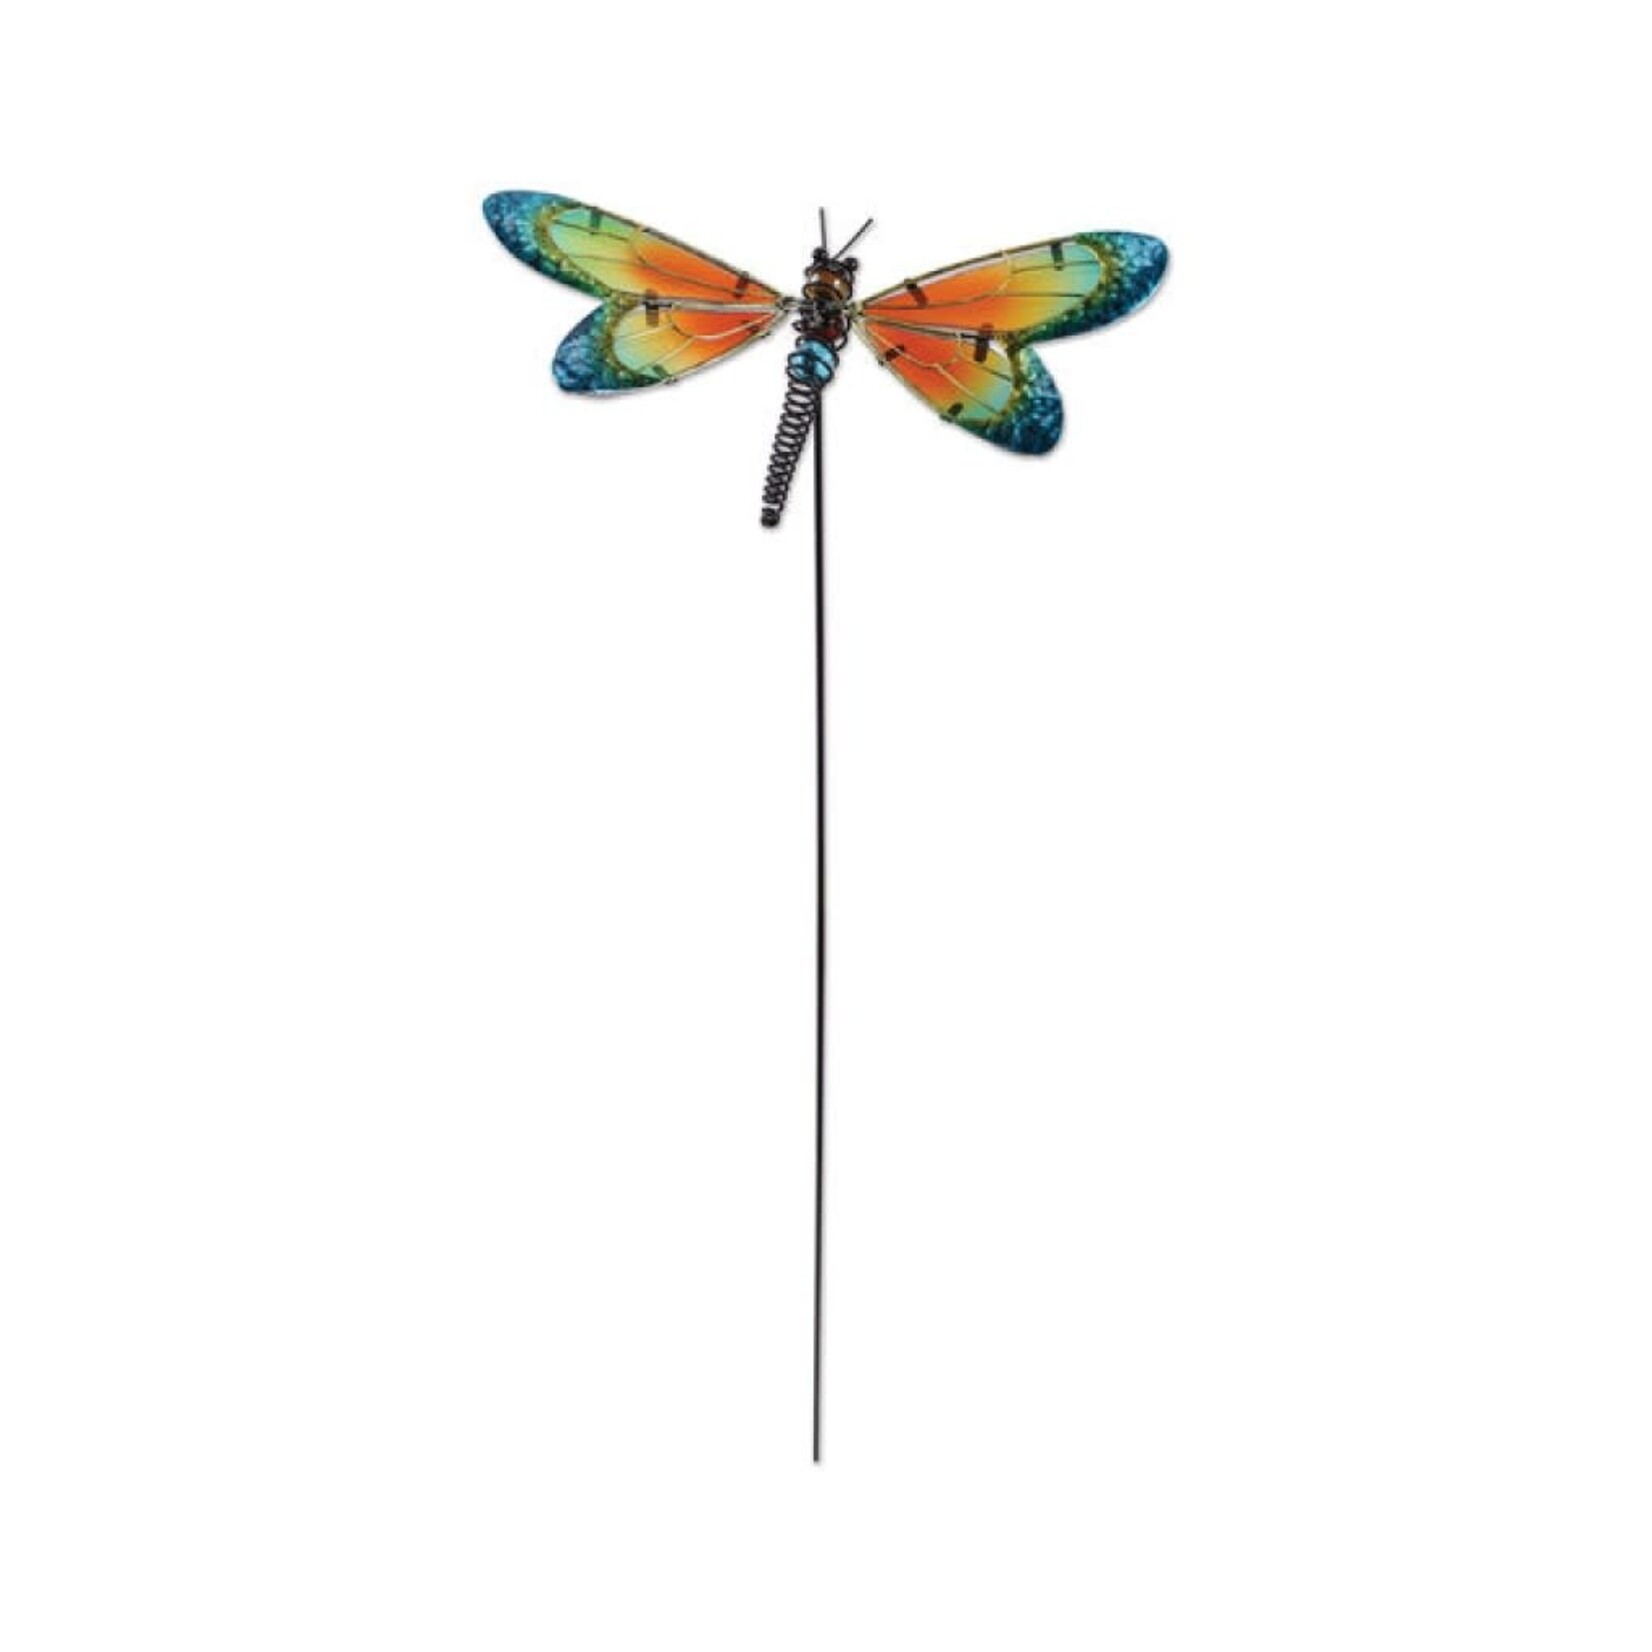 Garden Stake - Blue Dragonfly Pick